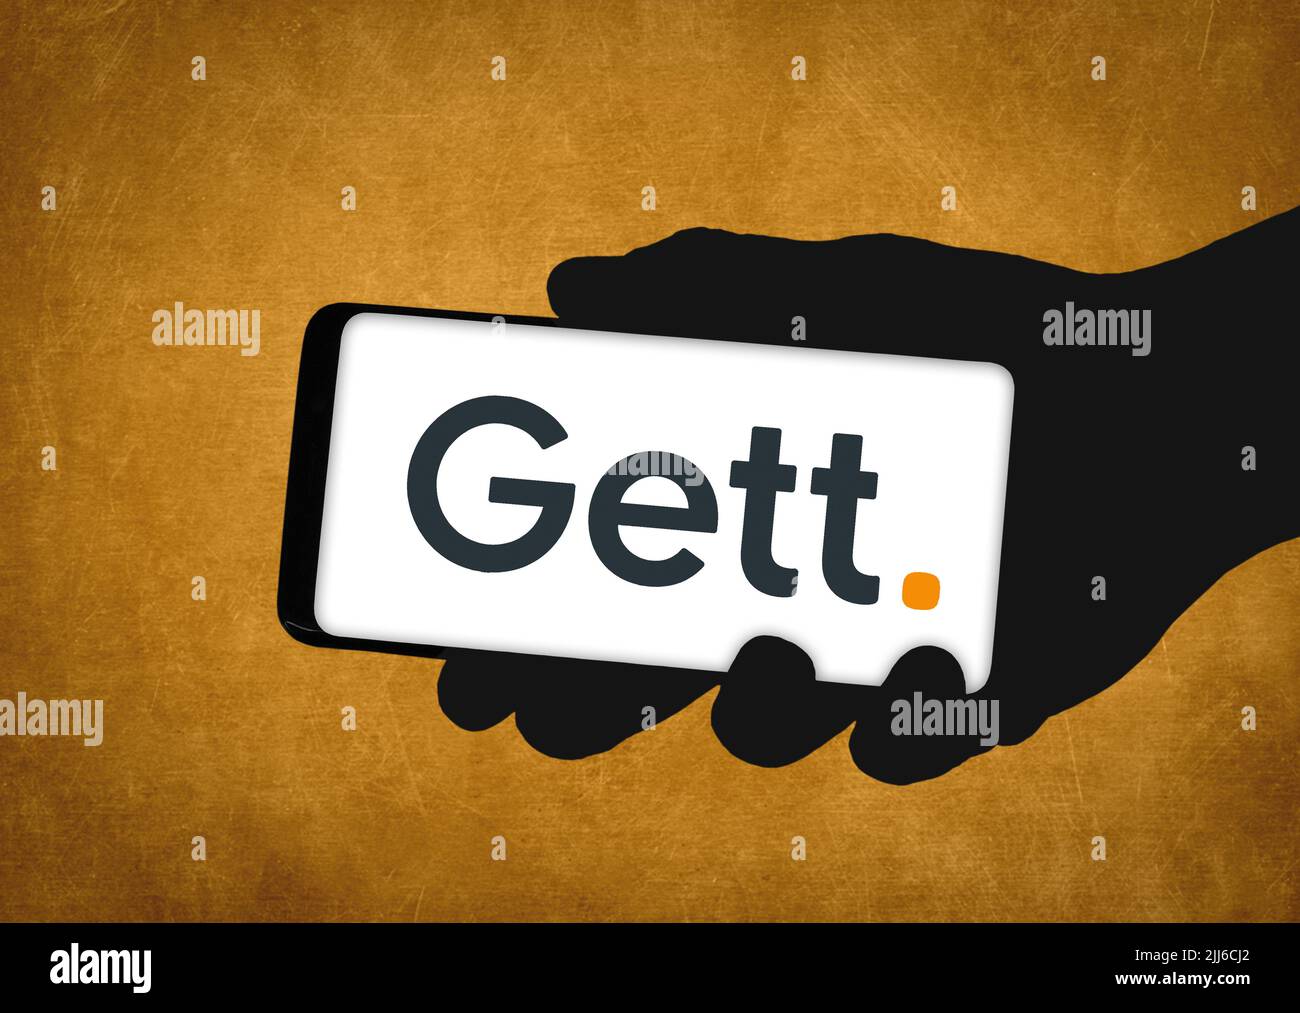 Gett company logo on mobile device Stock Photo